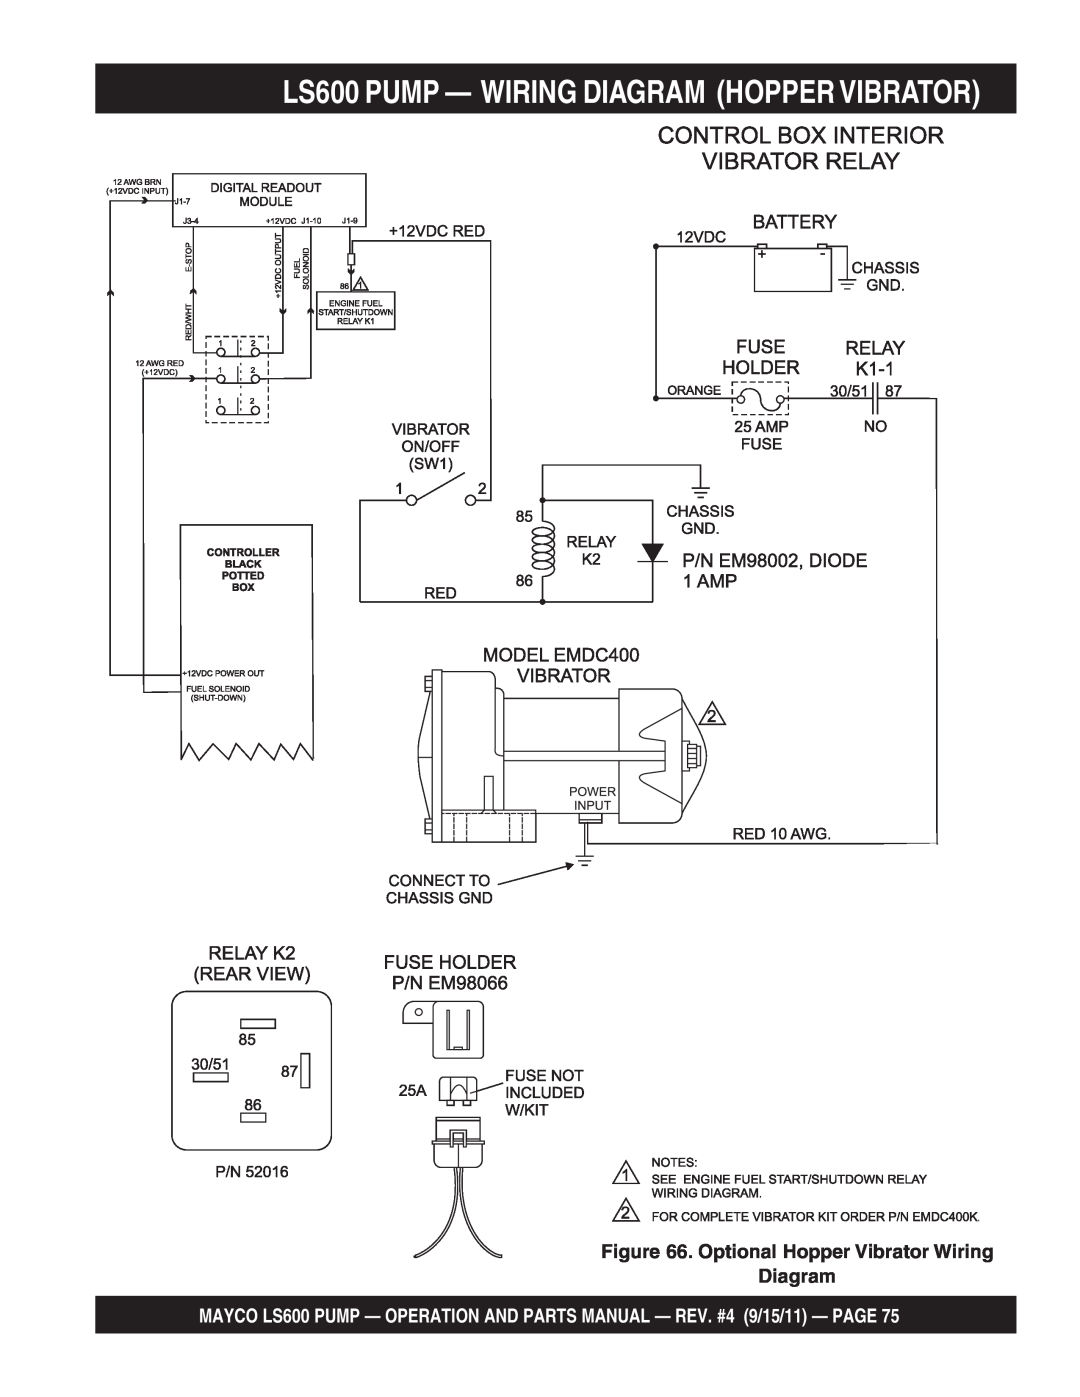 Multiquip manual LS600 PUMP — WIRING DIAGRAM HOPPER VIBRATOR, Optional Hopper Vibrator Wiring, Diagram 